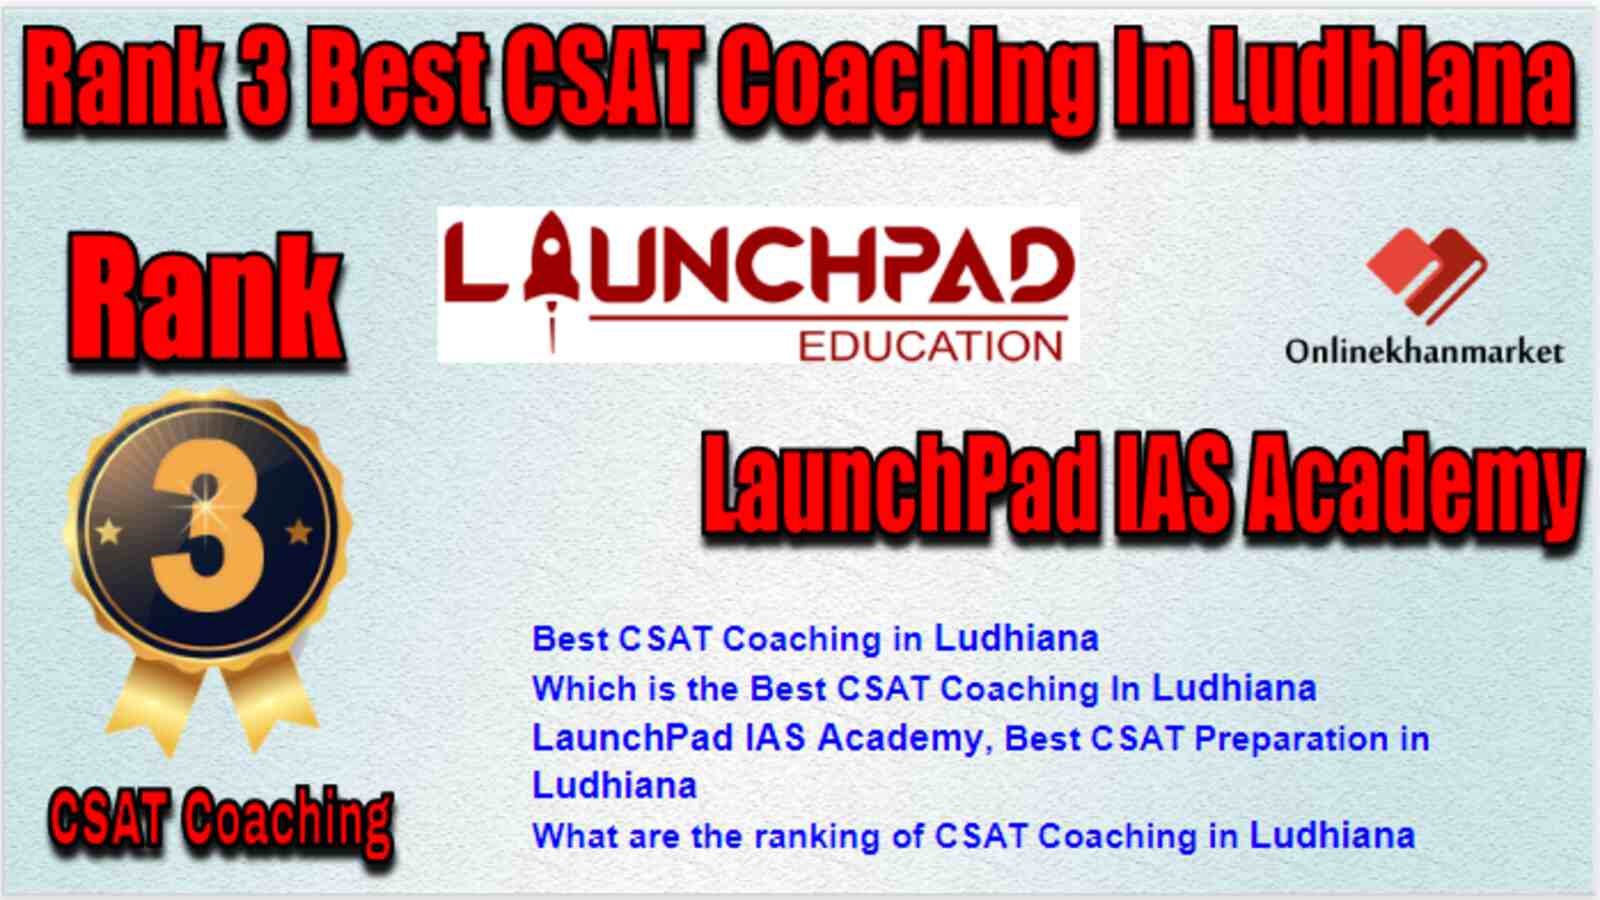 Rank 3 Best CSAT Coaching in Ludhiana